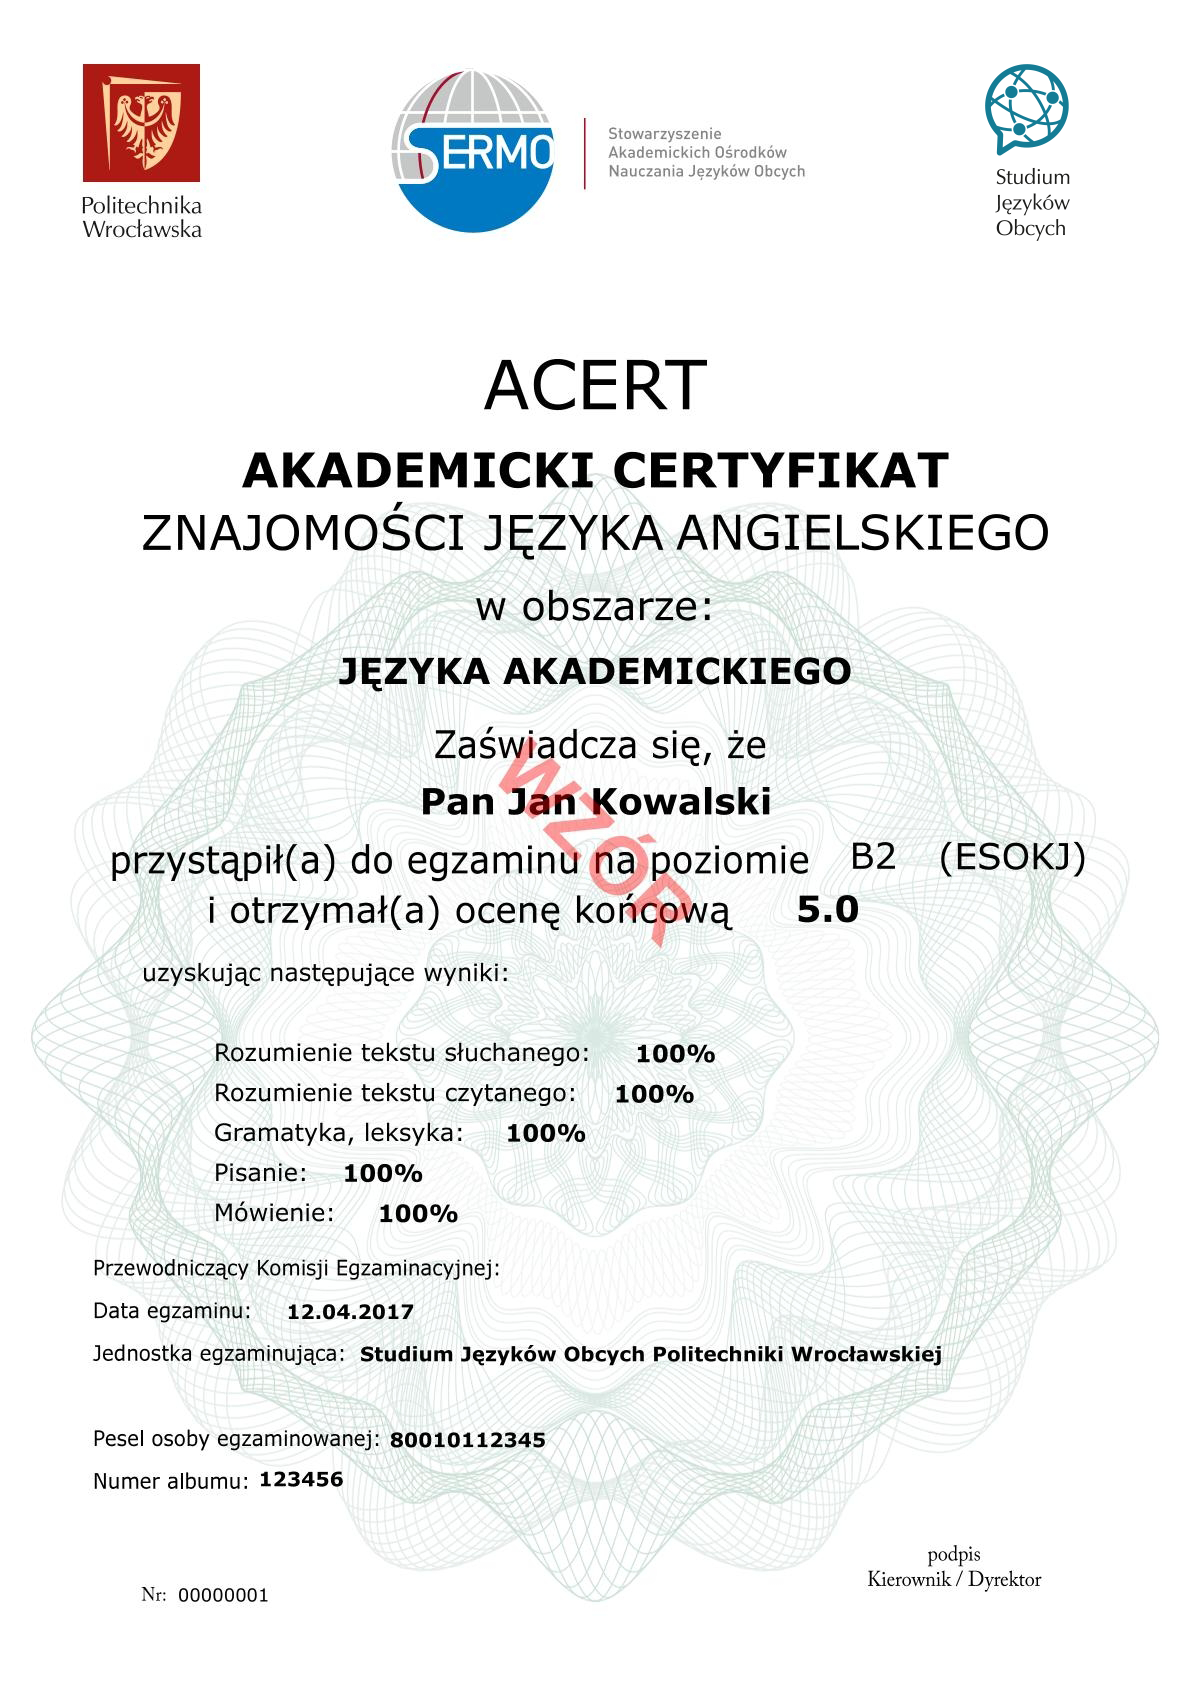 wzor_acert_pl.png